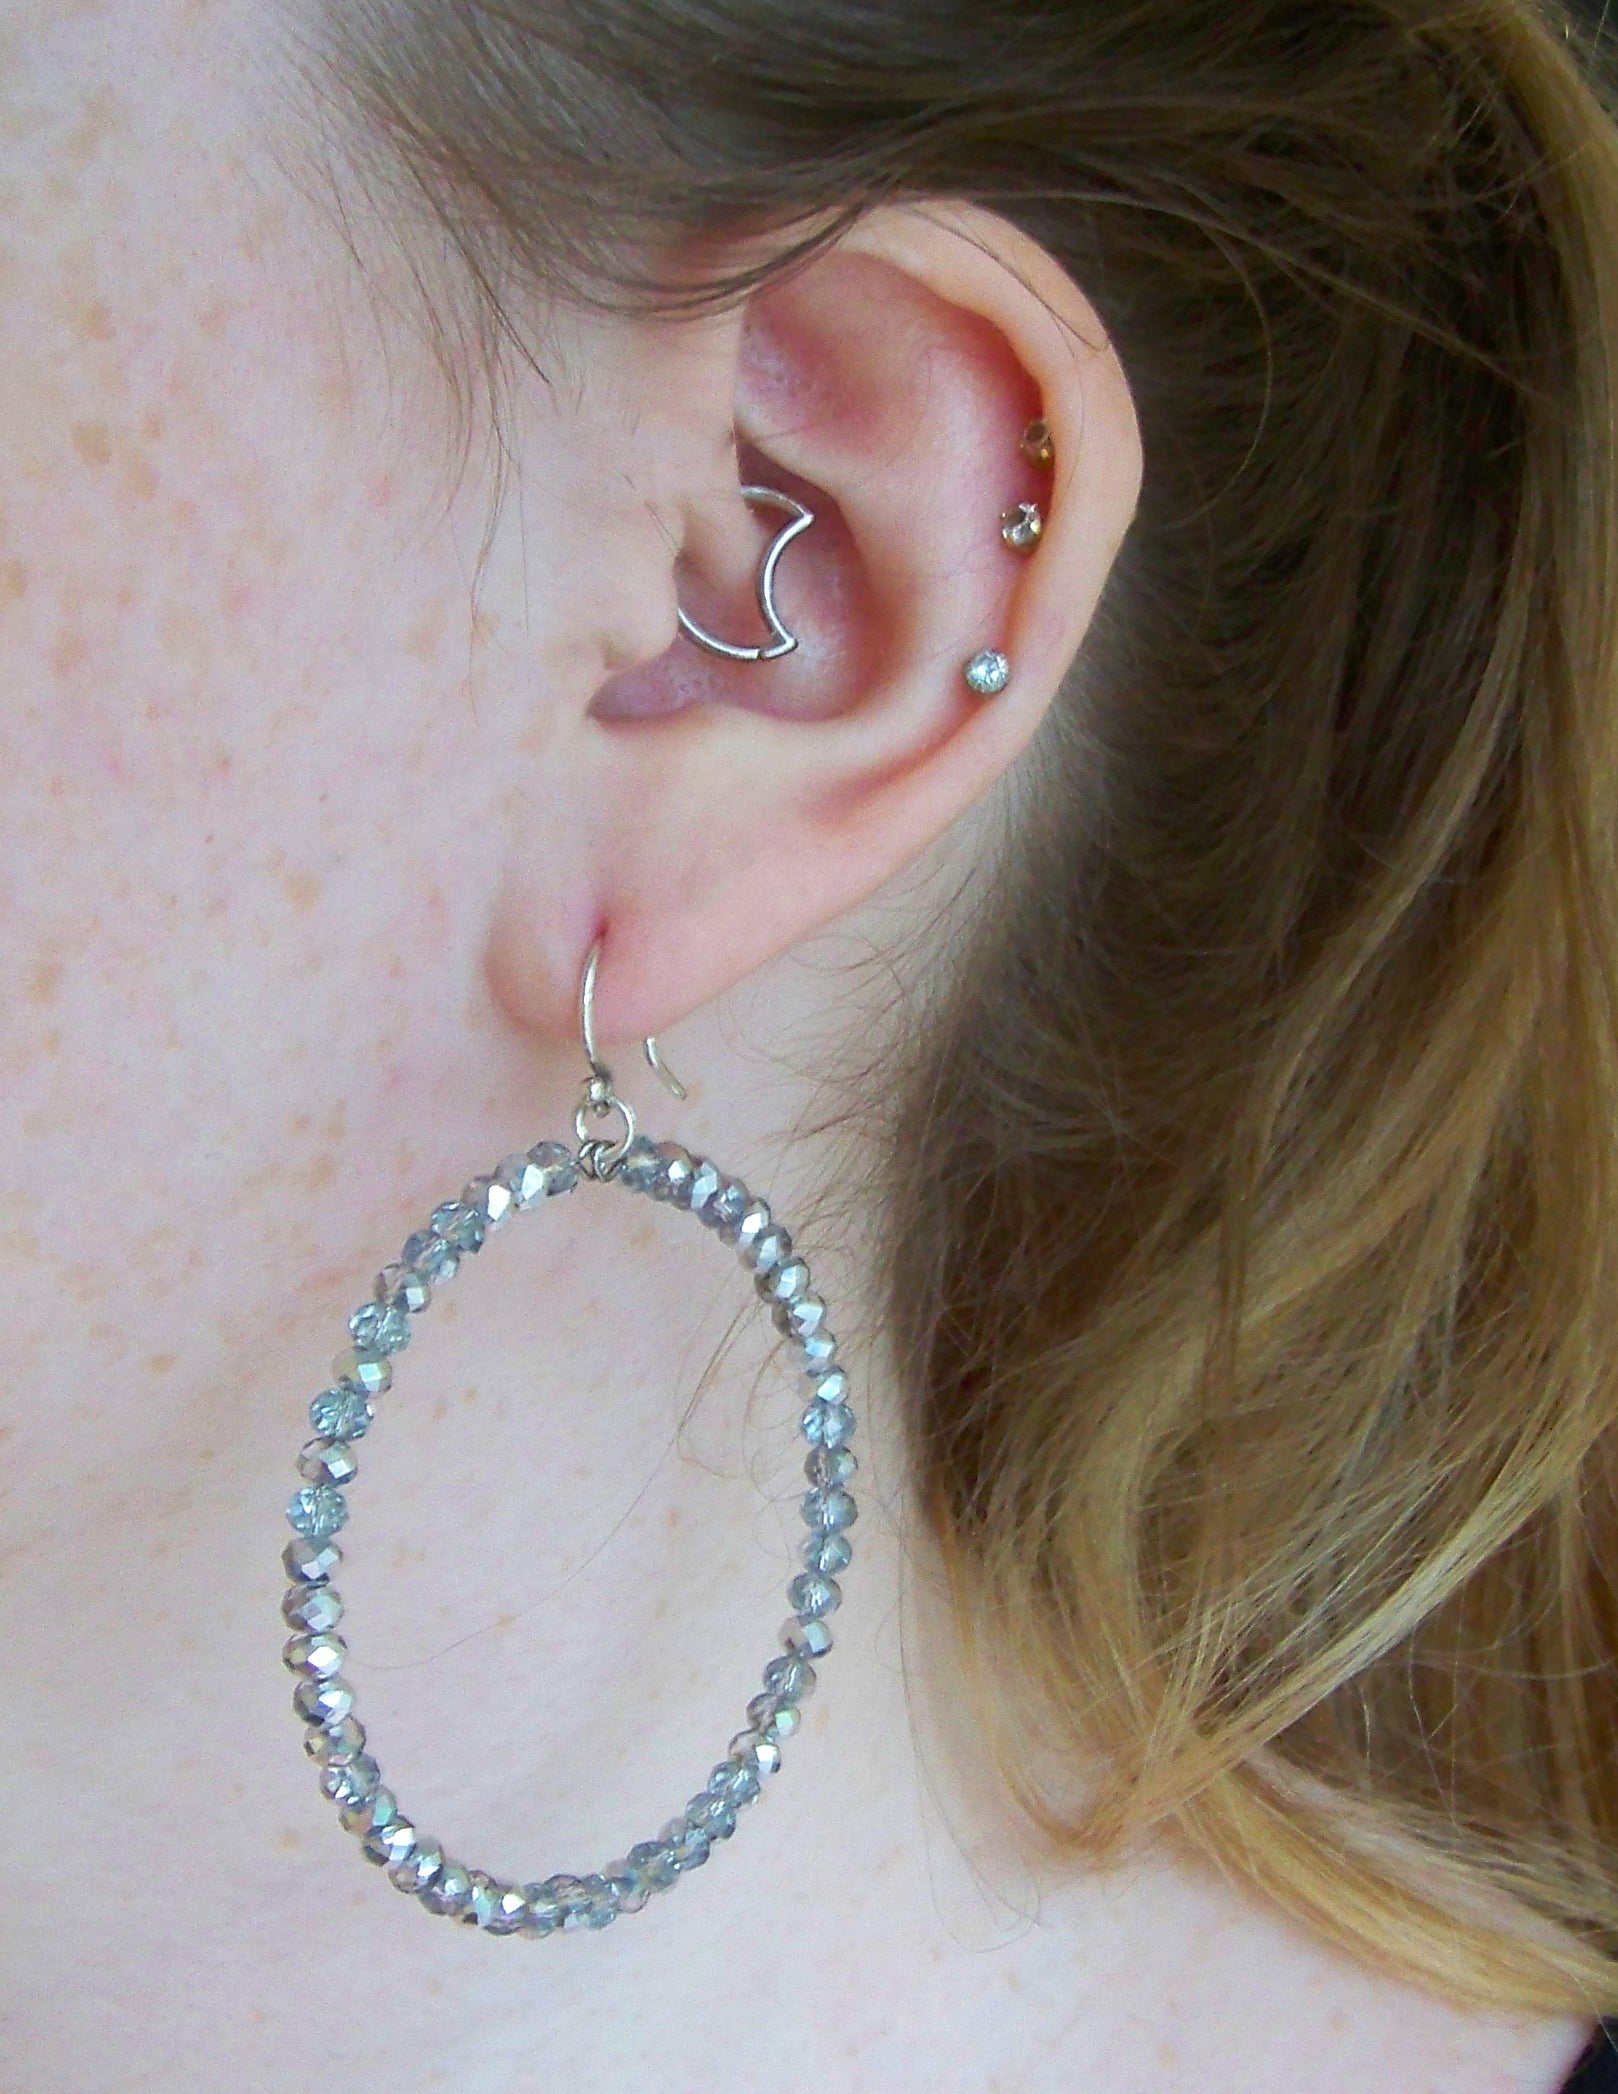 Chan Luu 2.25 Inch Silver Hoop Earrings with Silver Crystals